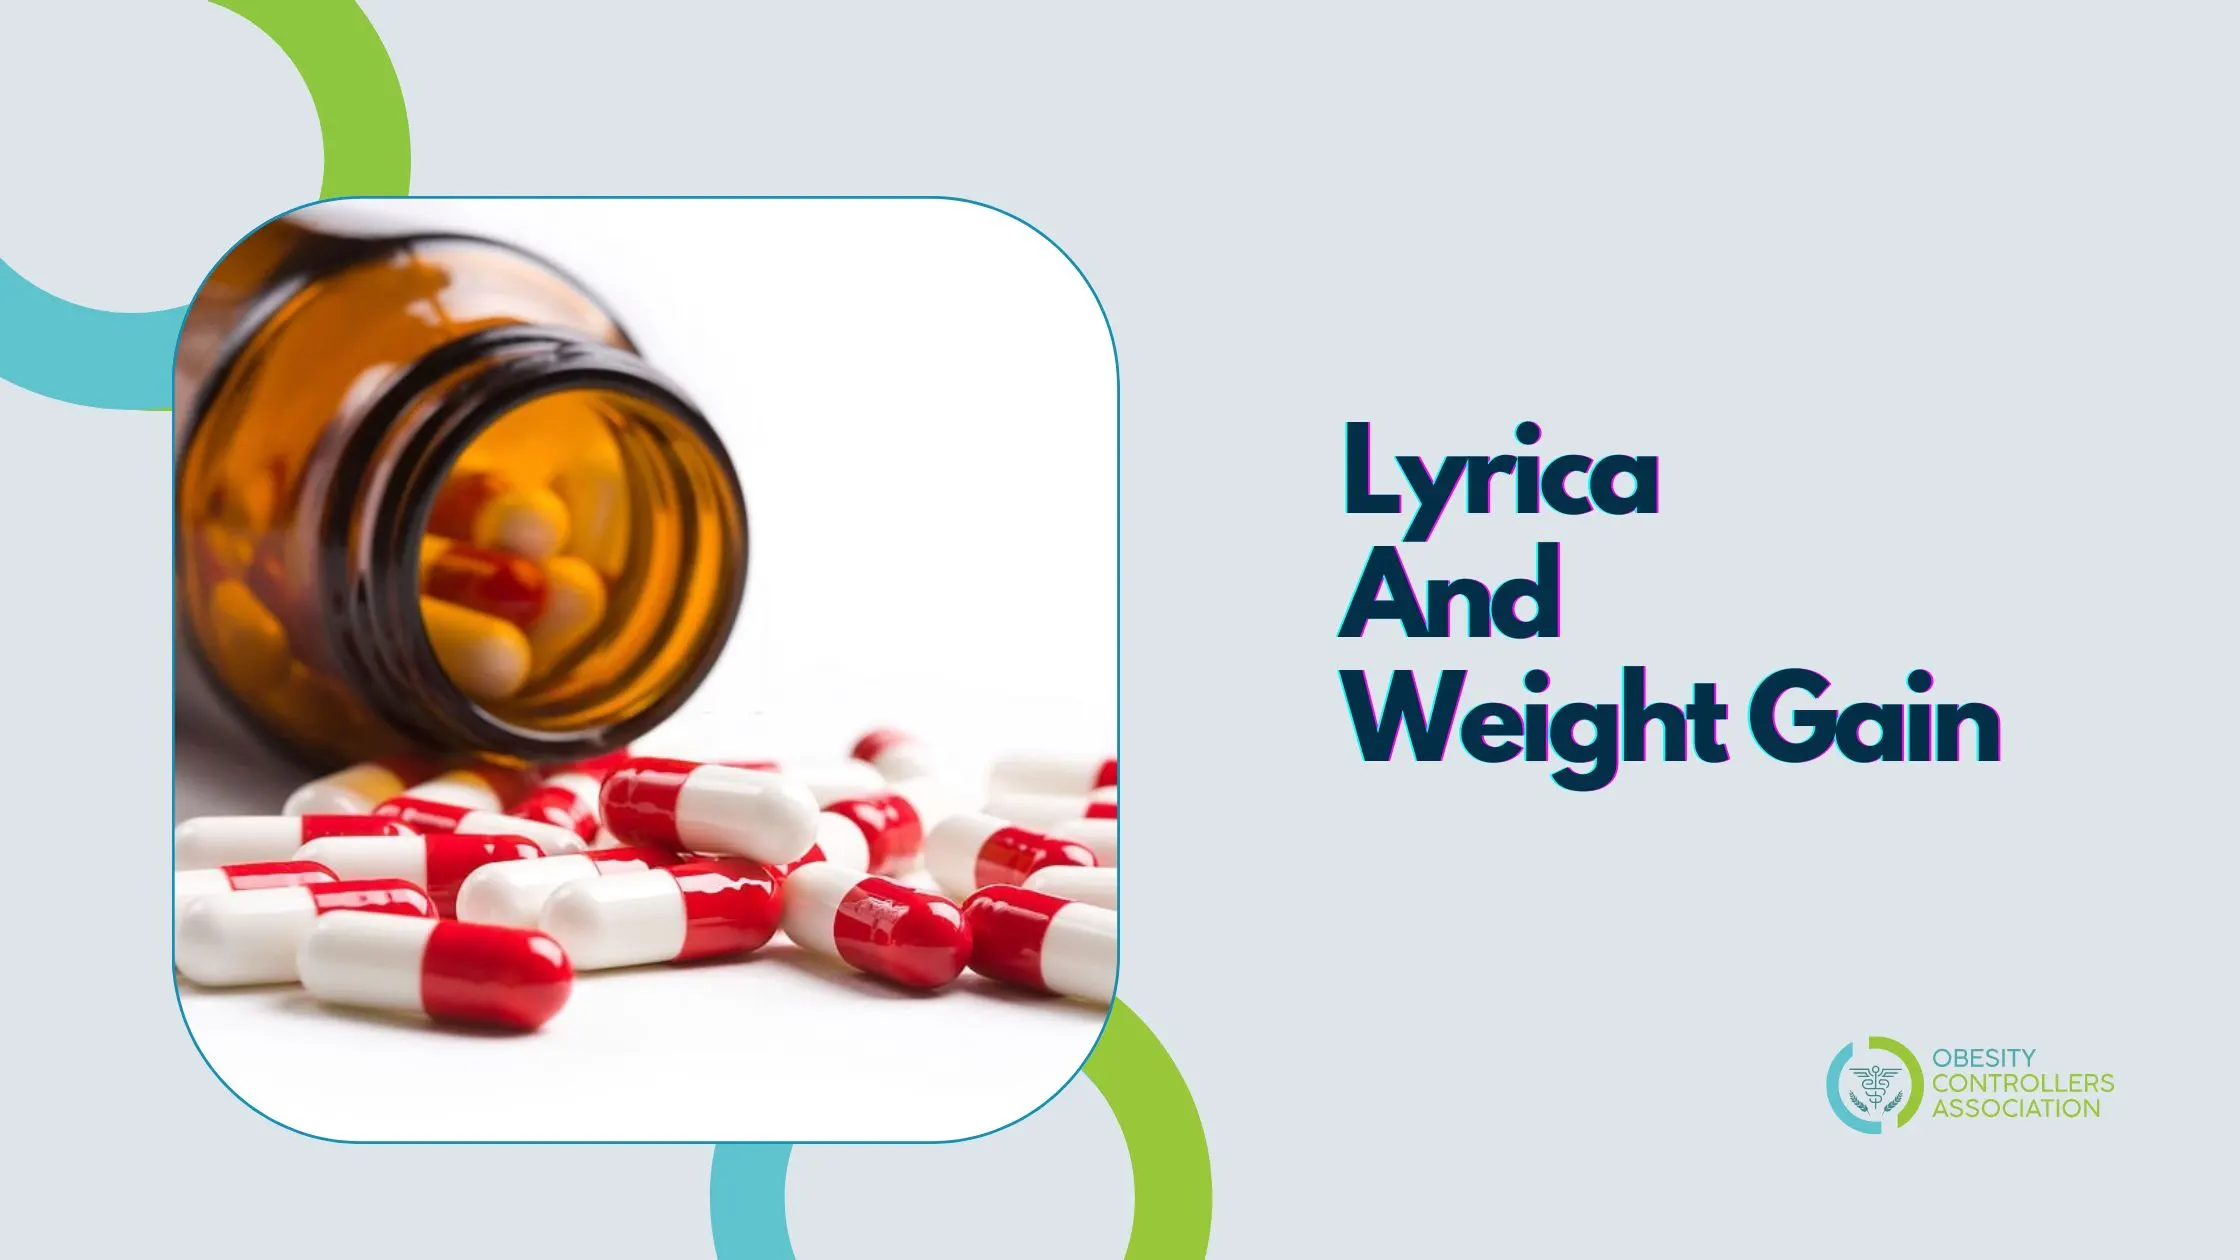 Lyrica and Weight Gain